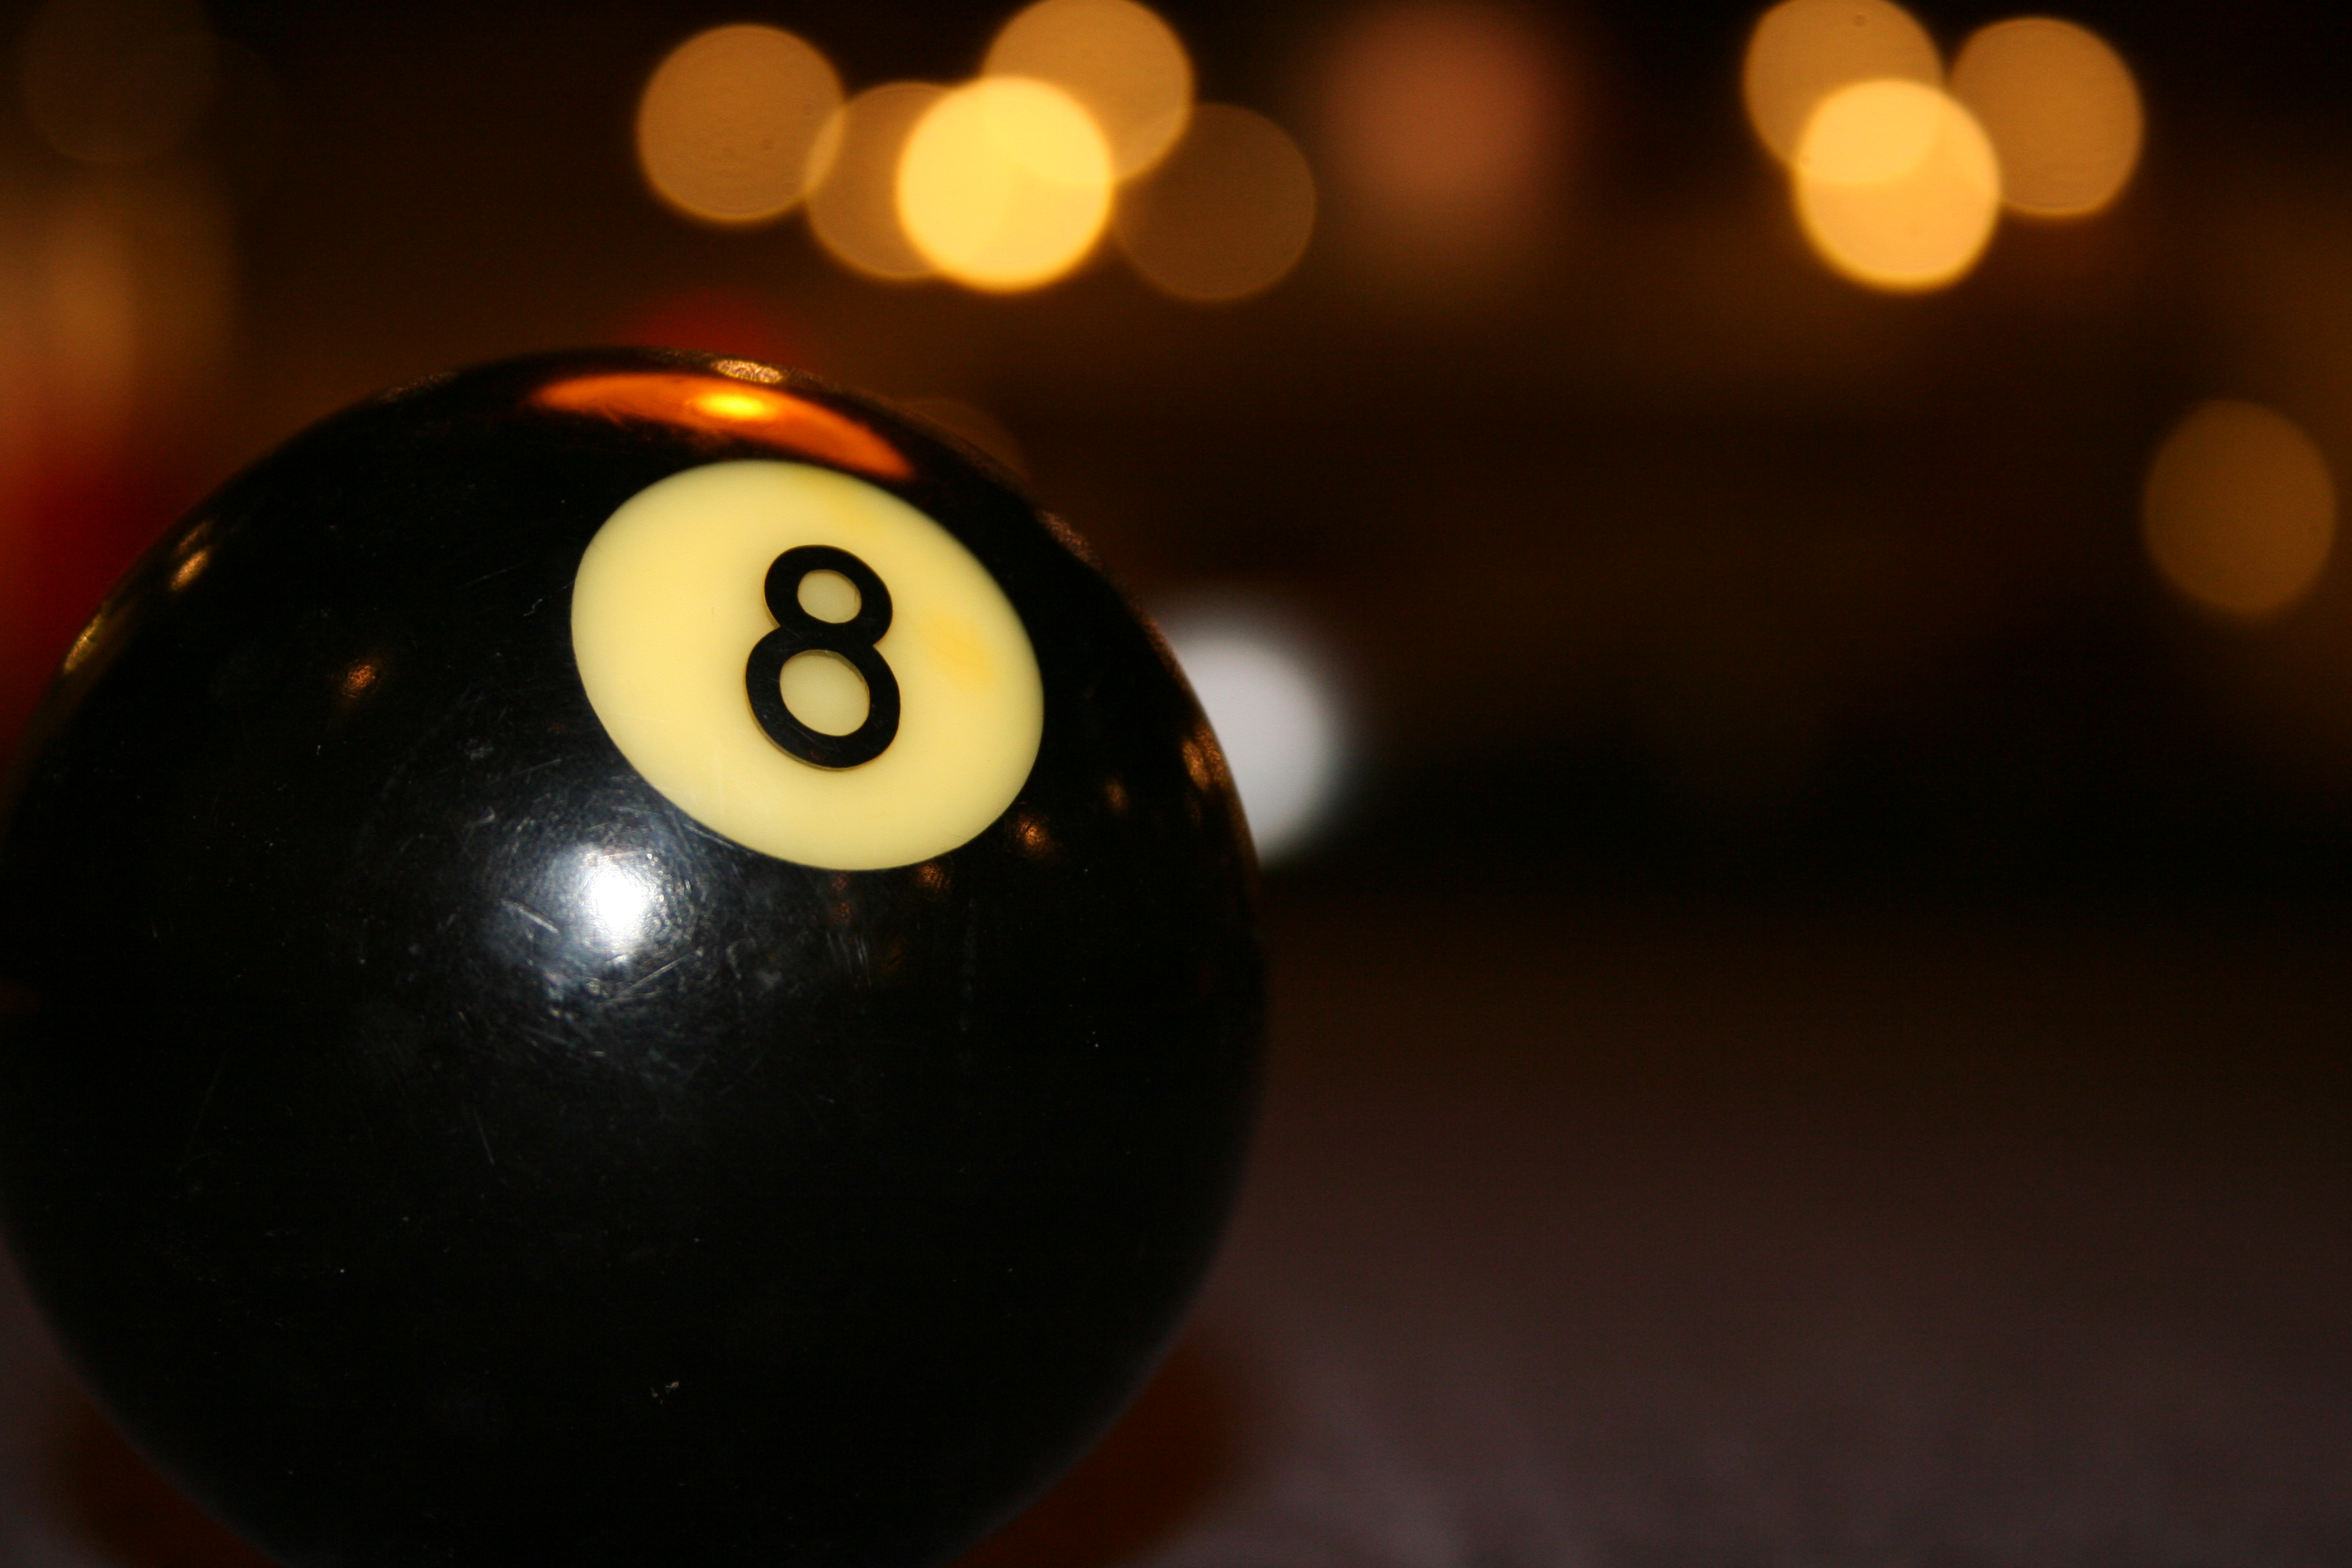 Miscellaneous - 8 Ball by NorthboundPhotos on DeviantArt